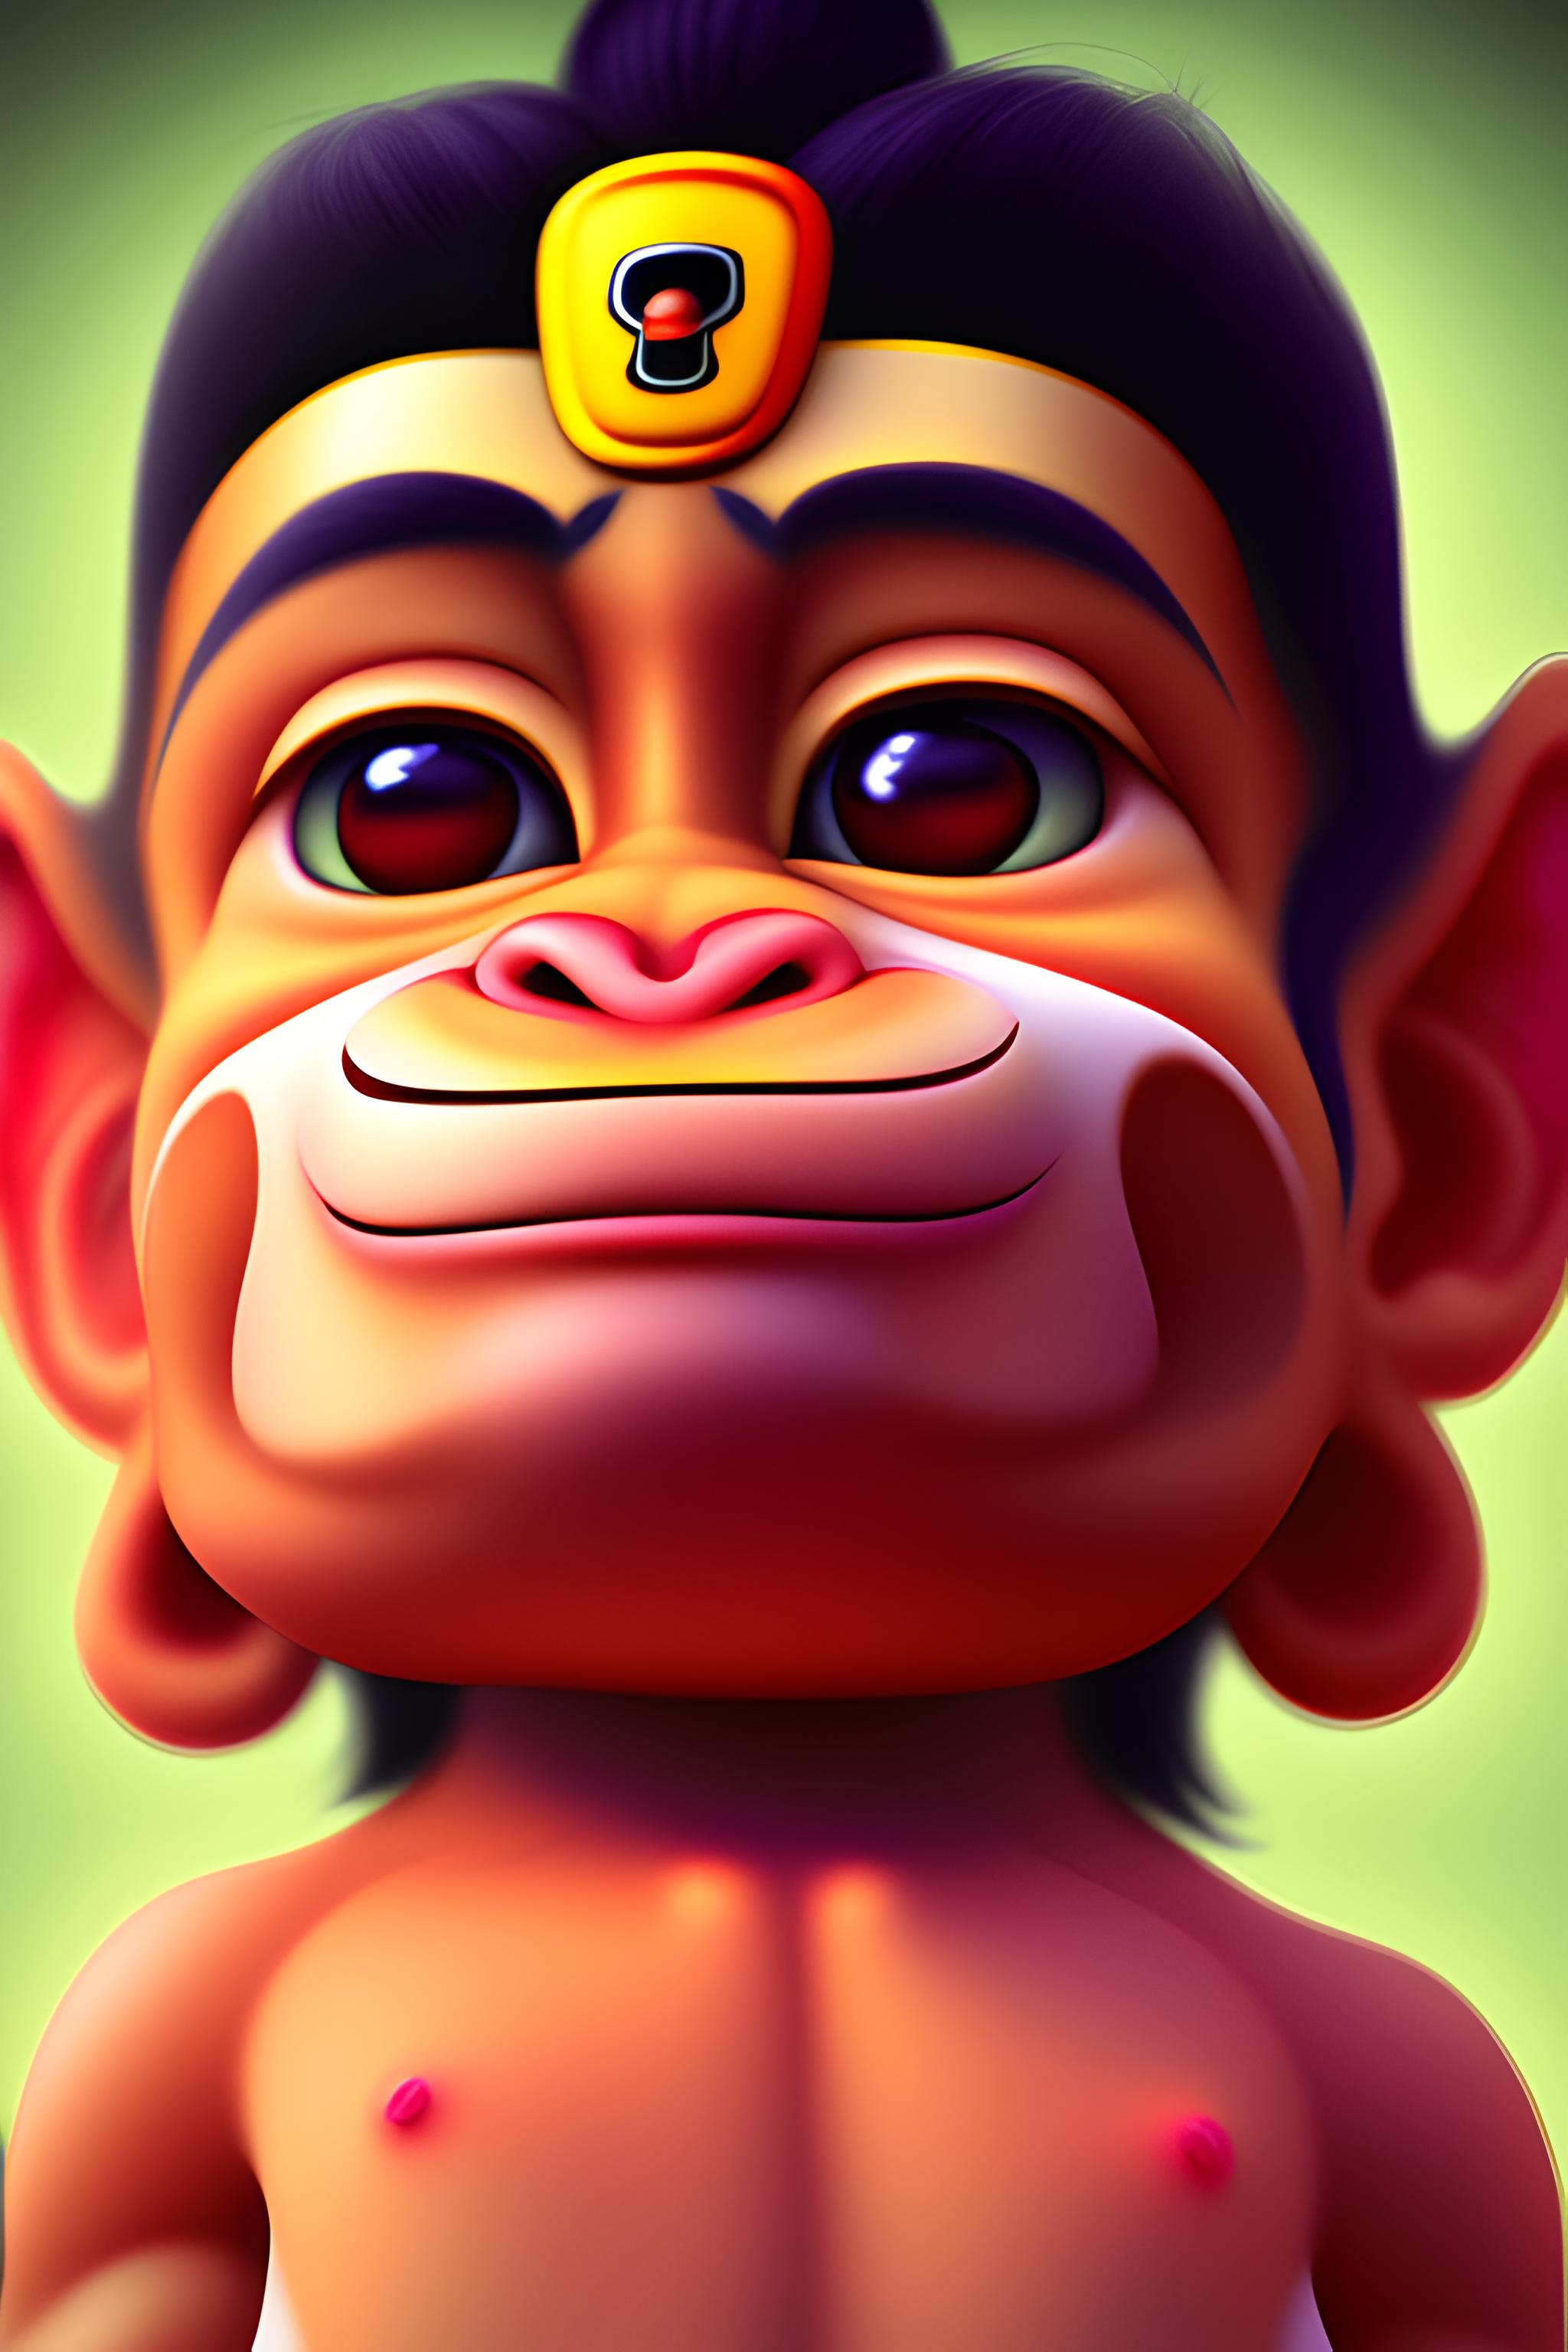 Baby Hanuman in modern style